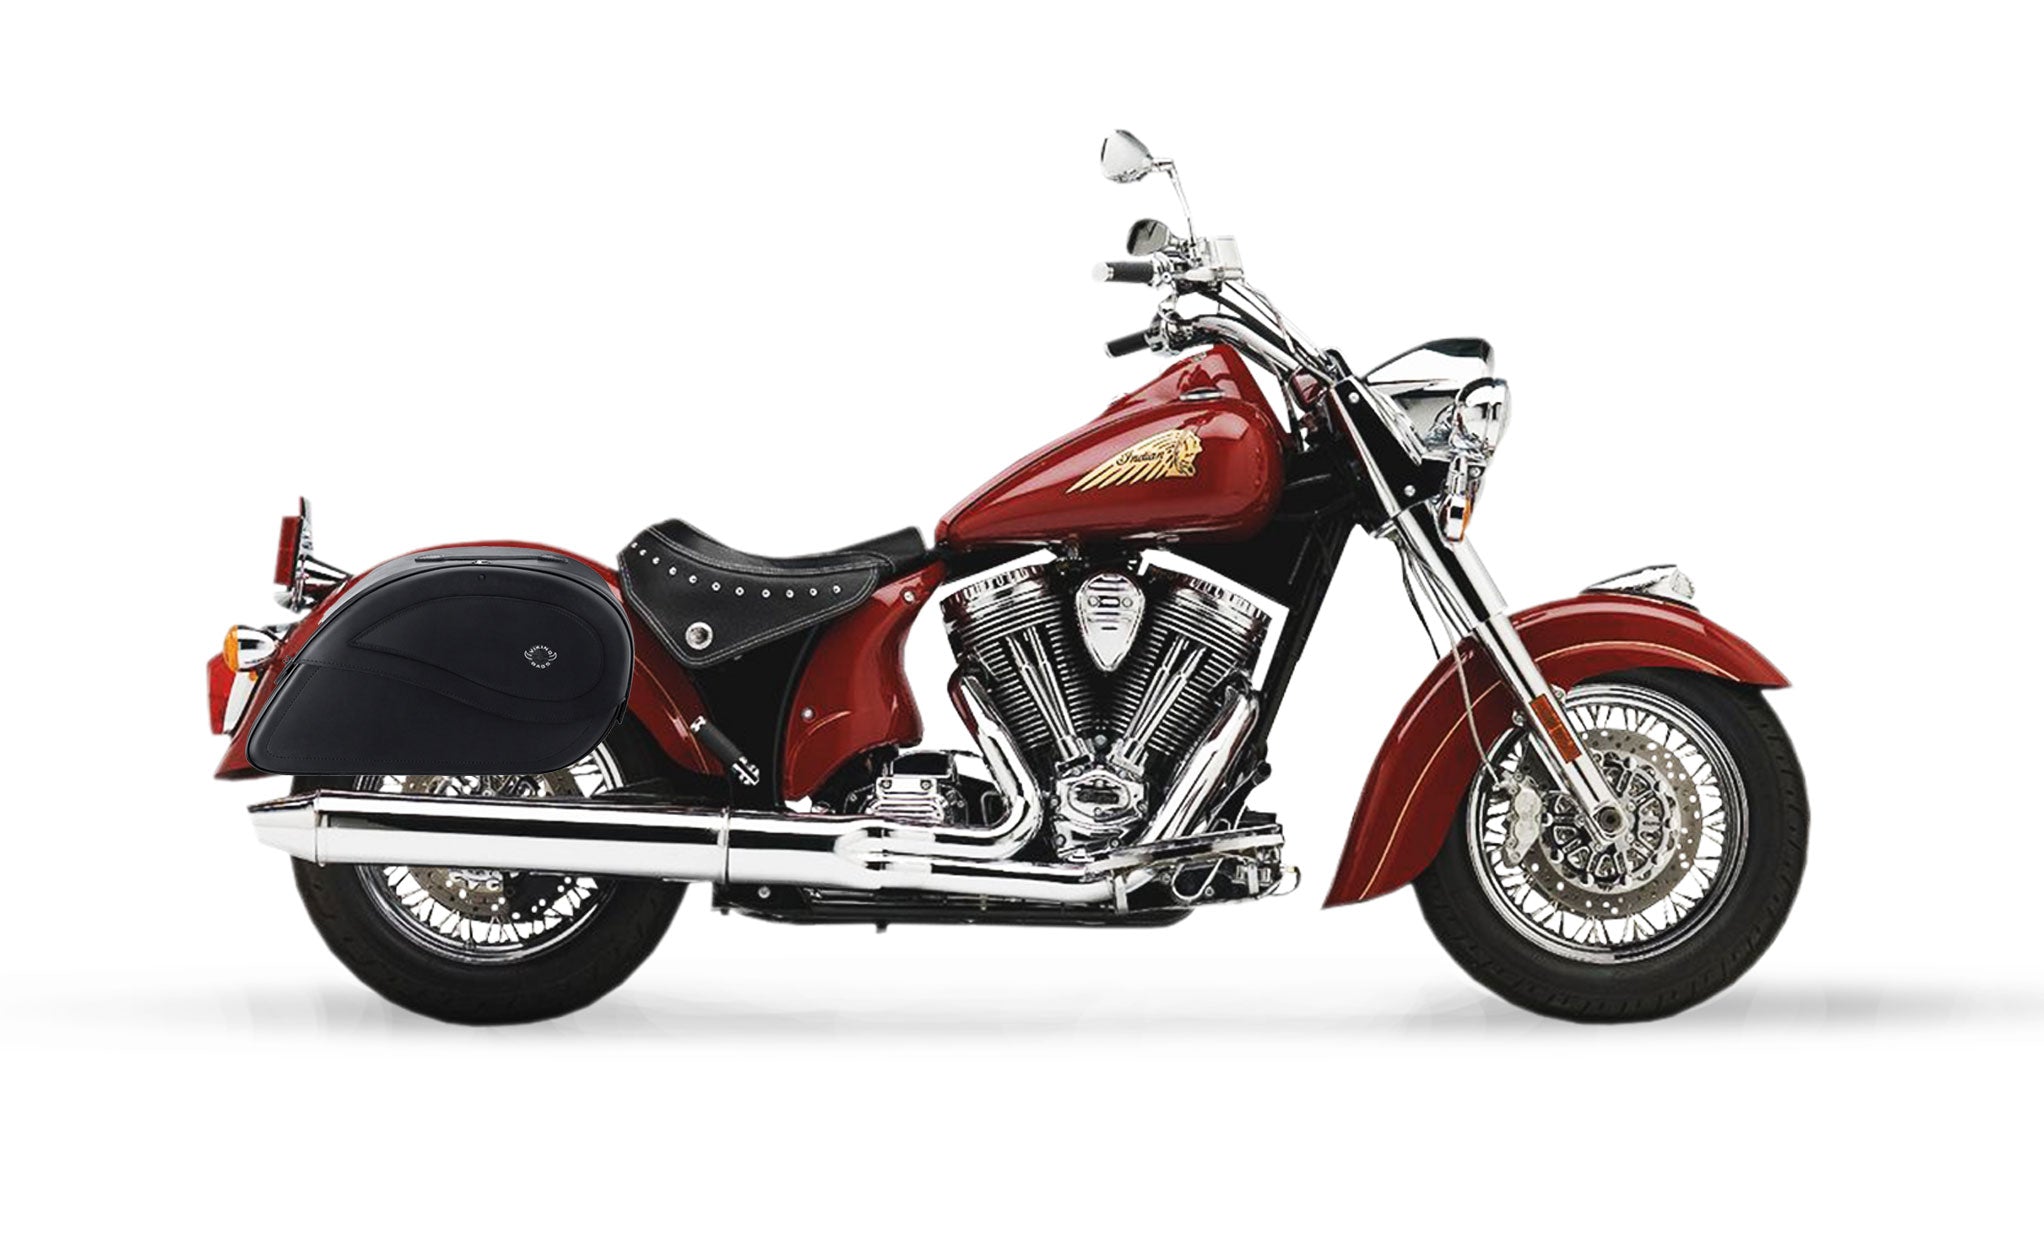 Viking Ultimate Large Indian Chief Standard Leather Motorcycle Saddlebags on Bike Photo @expand